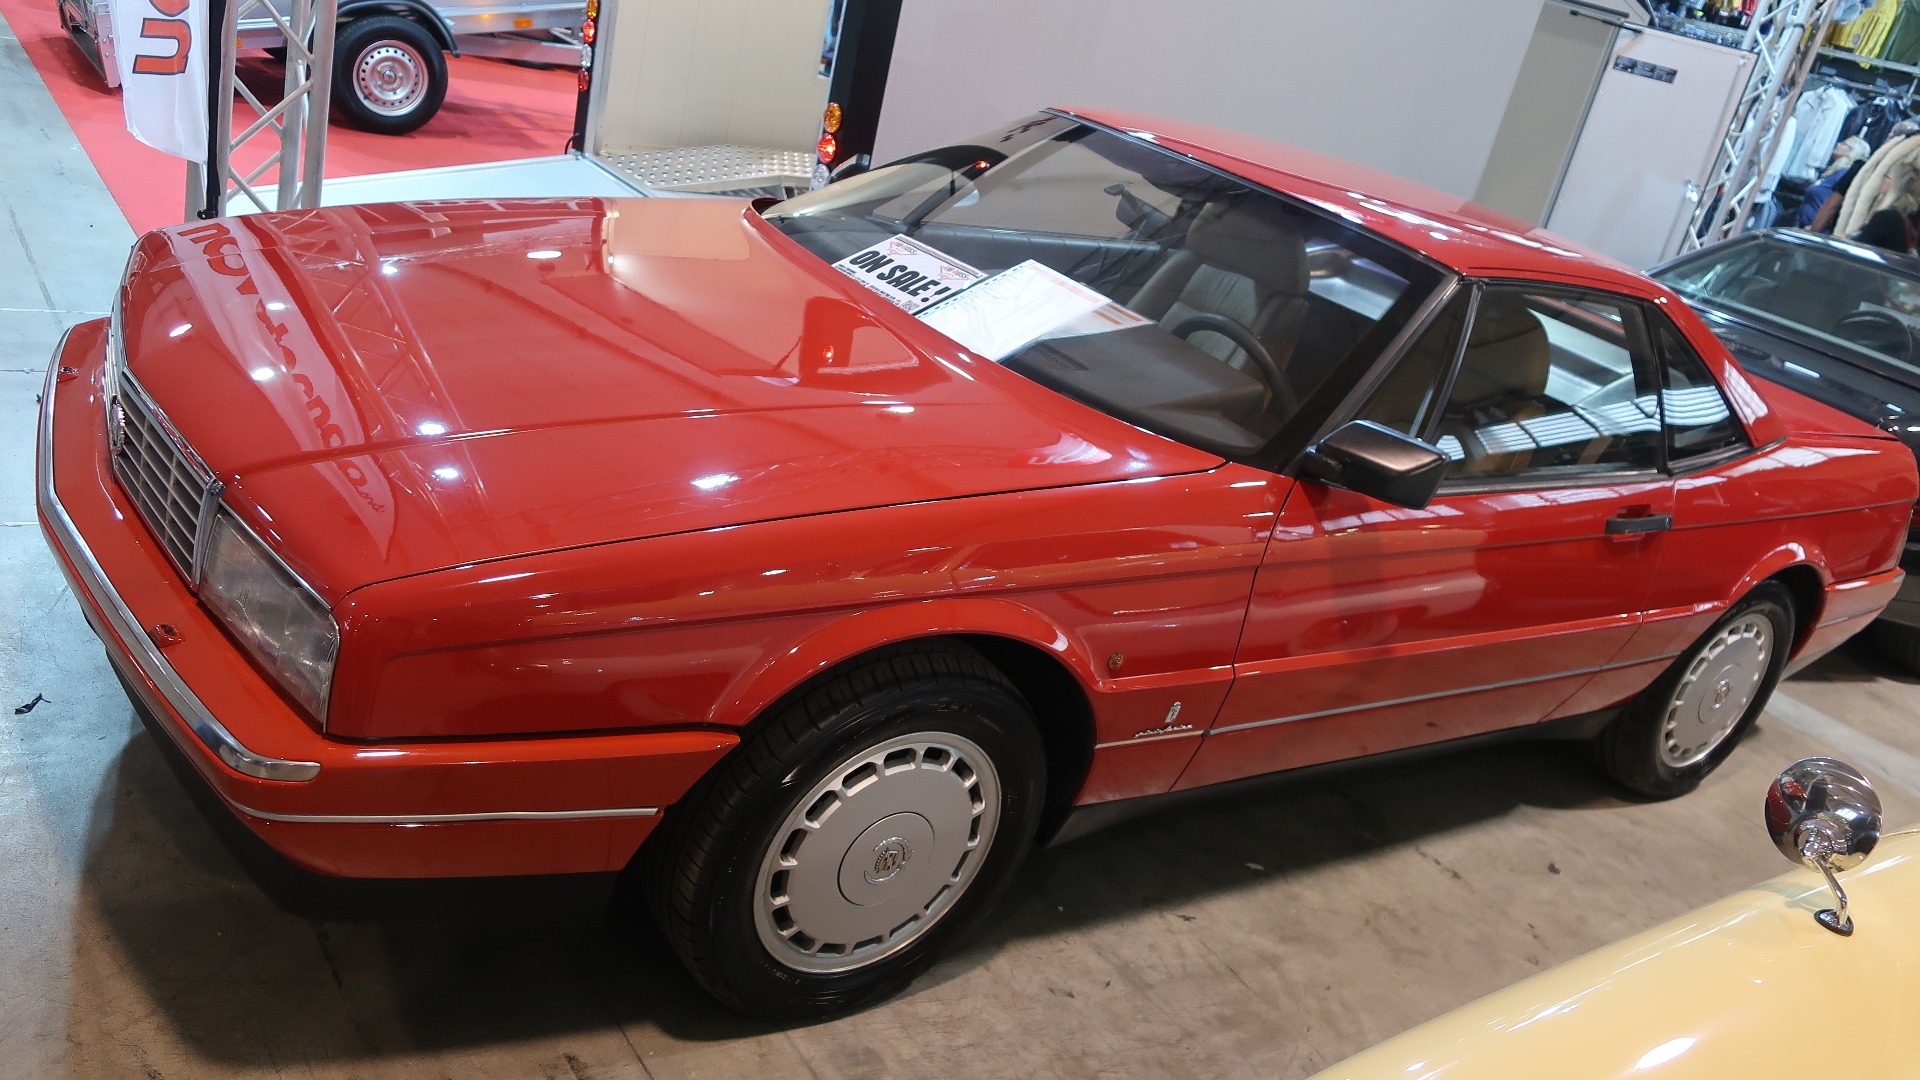 1992 Cadillac Allante til salgs for 18.500 Euro.